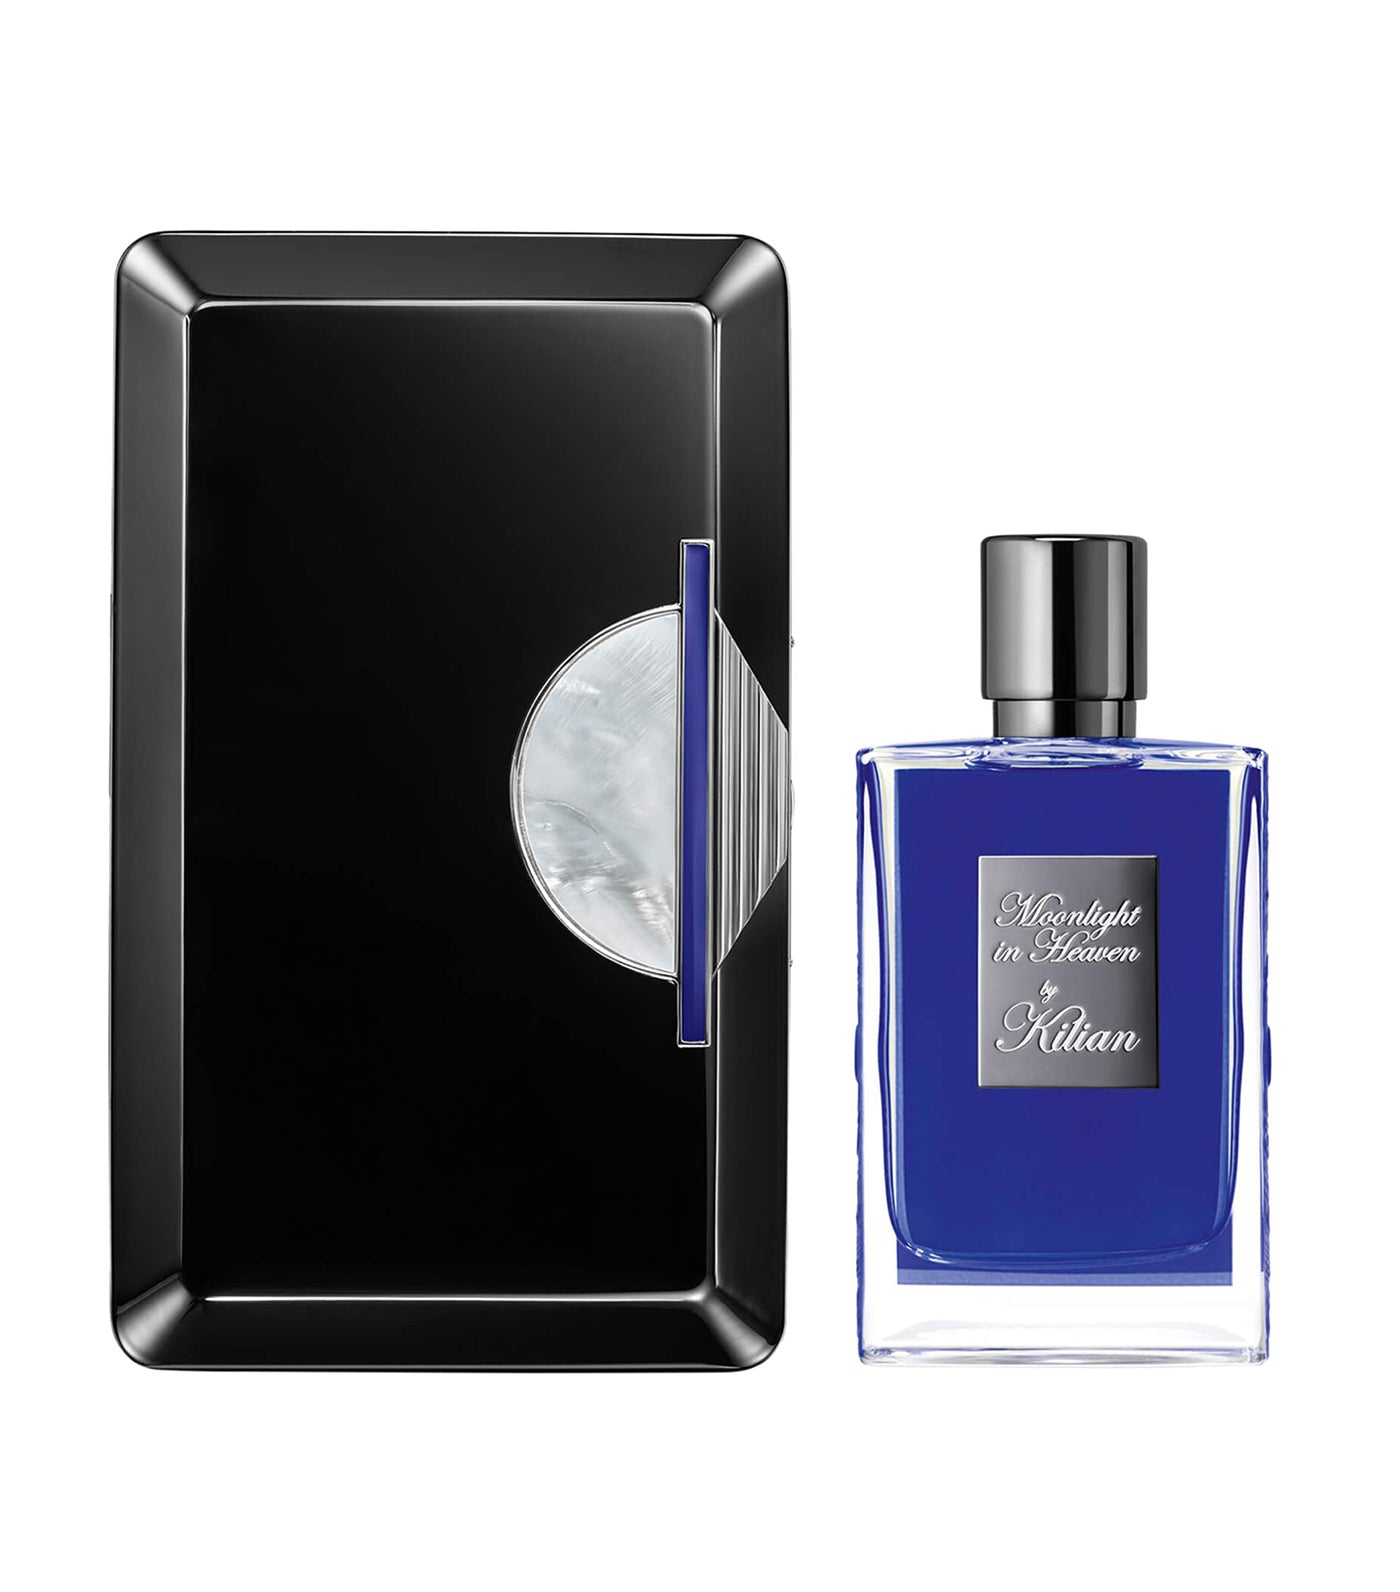 Kilian Paris Moonlight in Heaven Eau de Parfum and Clutch